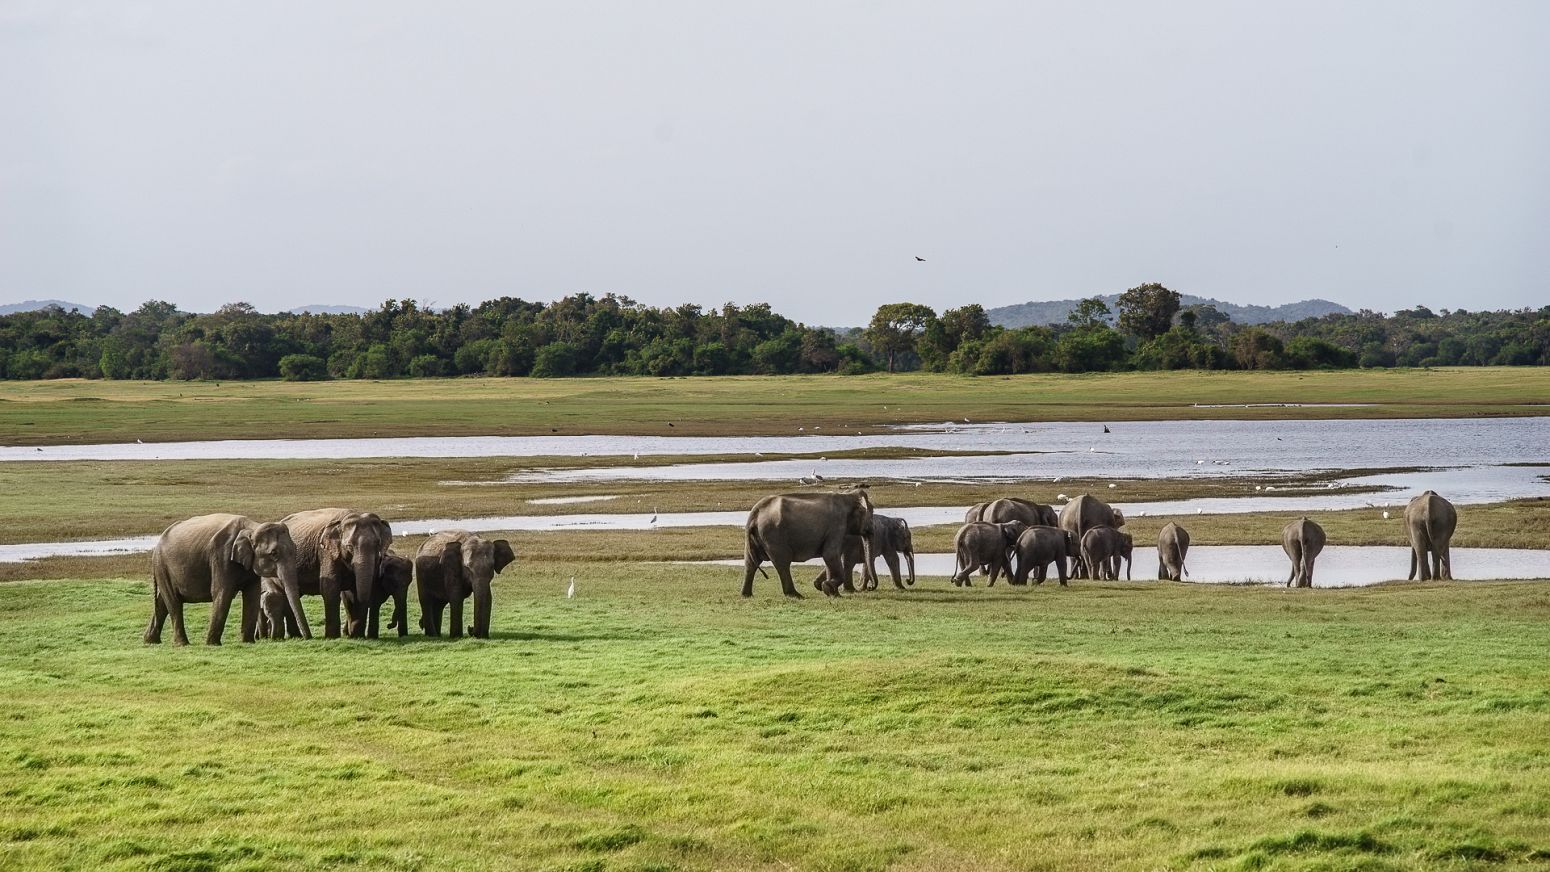 Elephants in Kaudulla National Park, Sri Lanka